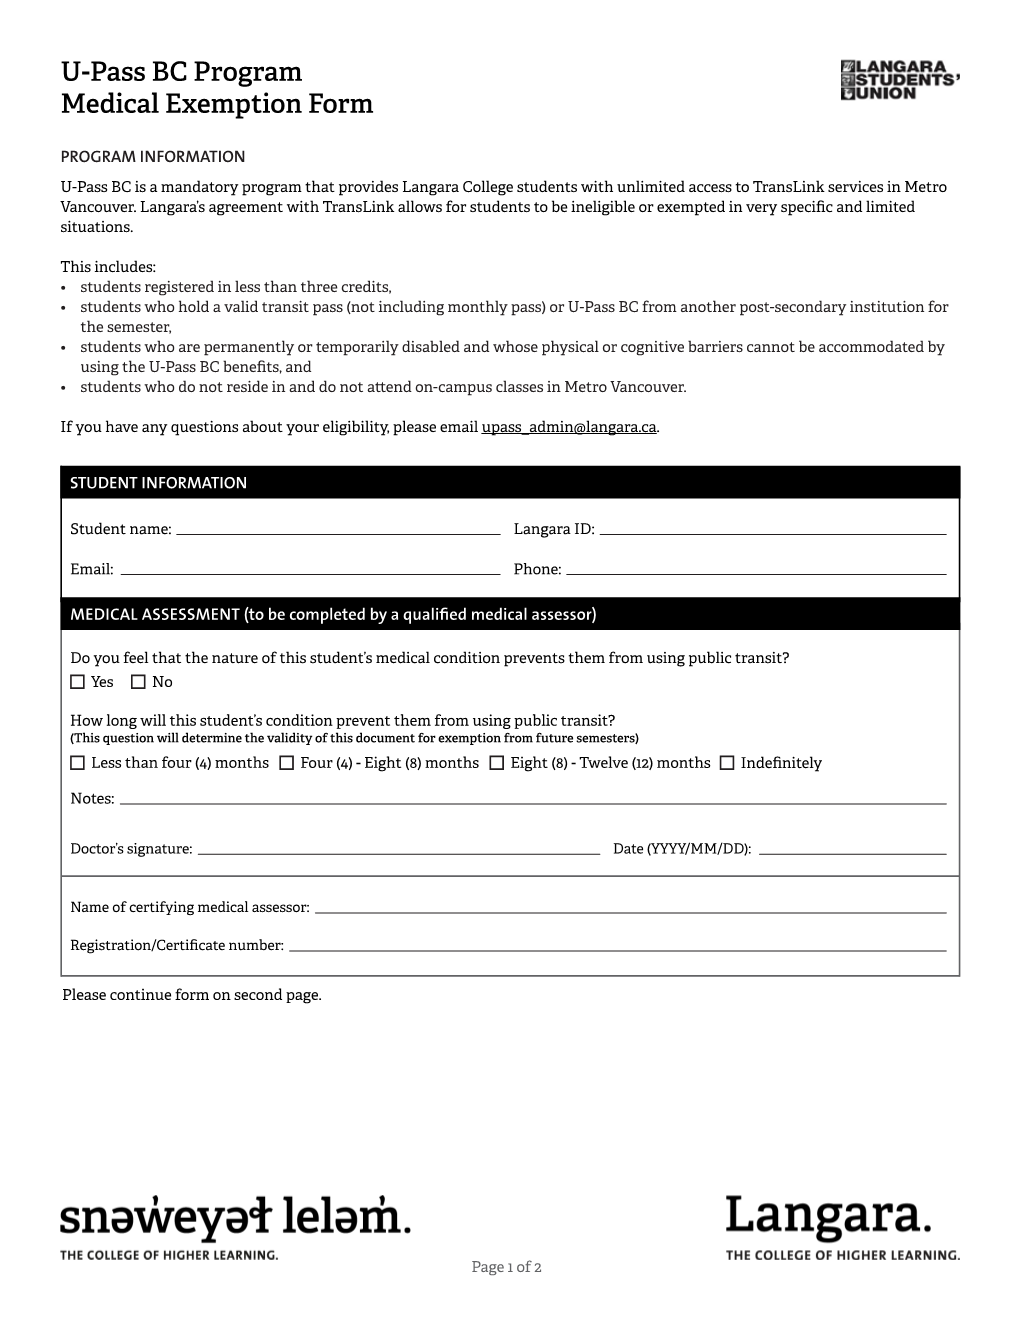 U-Pass BC Program Medical Exemption Form